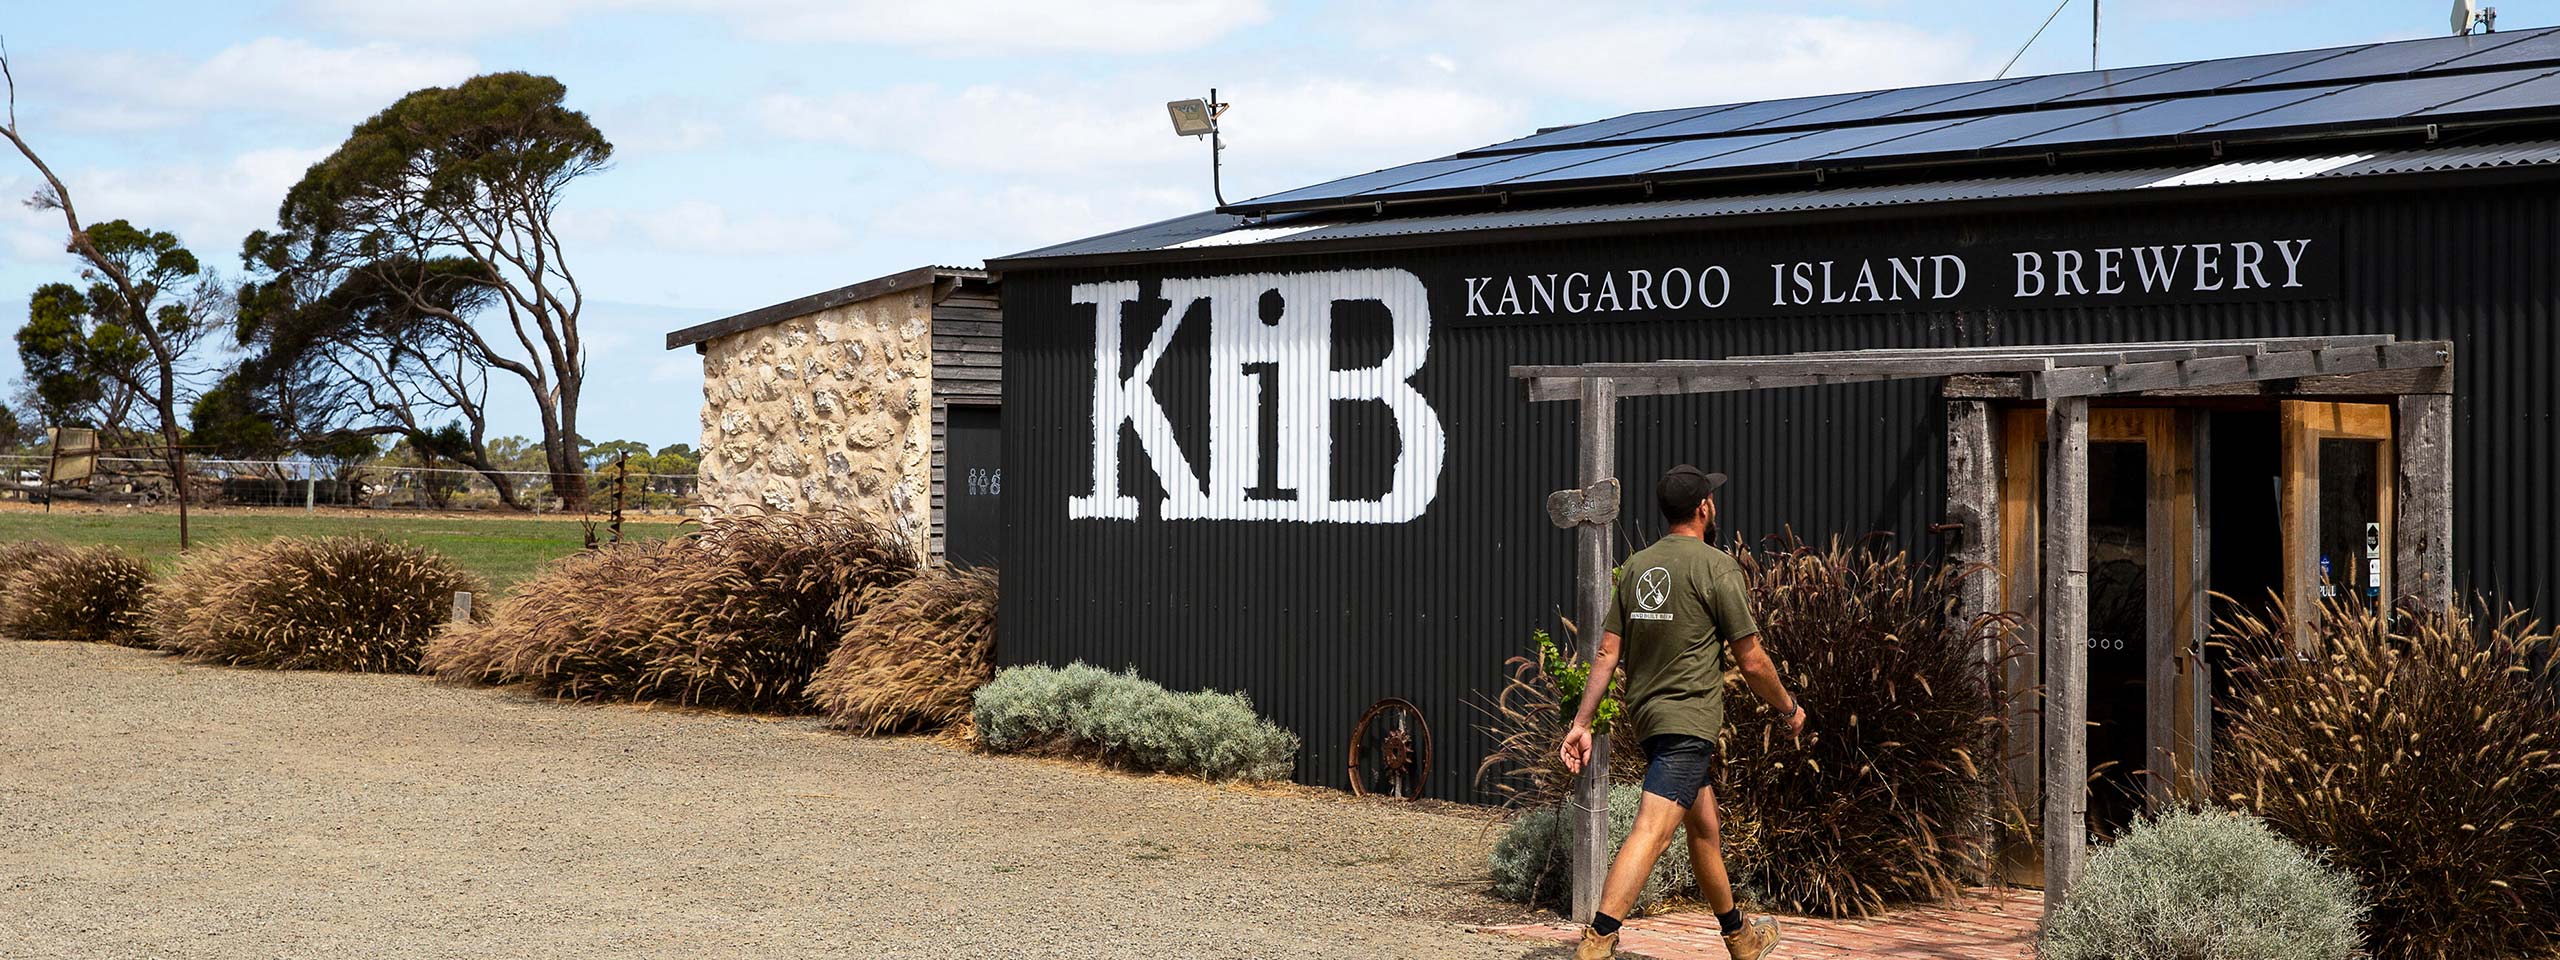 Kangaroo Island Brewery